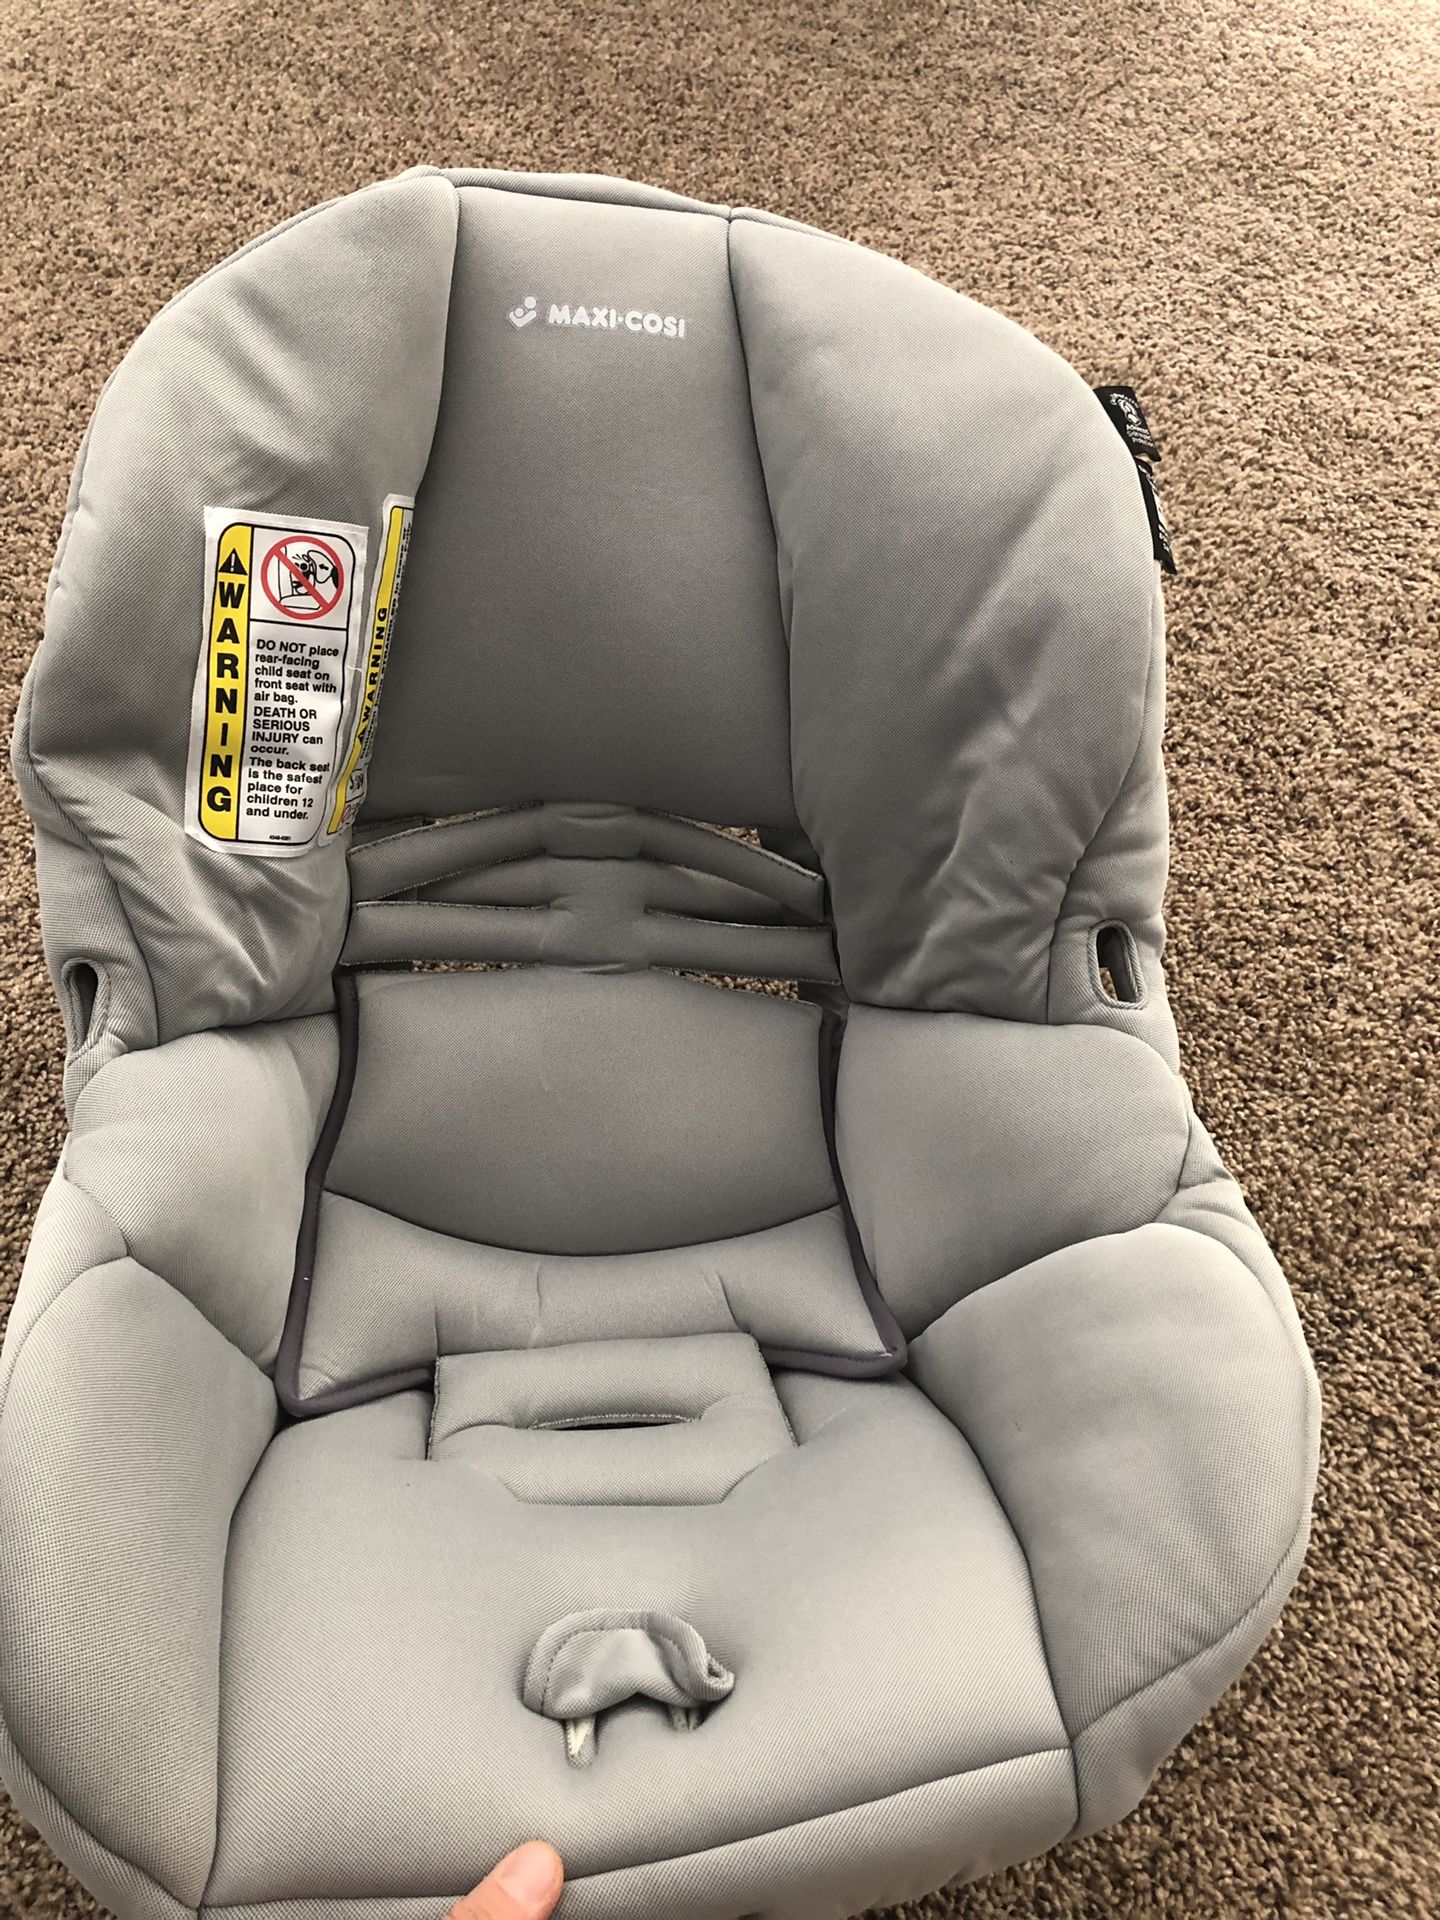 Maxi Cosi Mico 30 Infant Car Seat Pad Grey